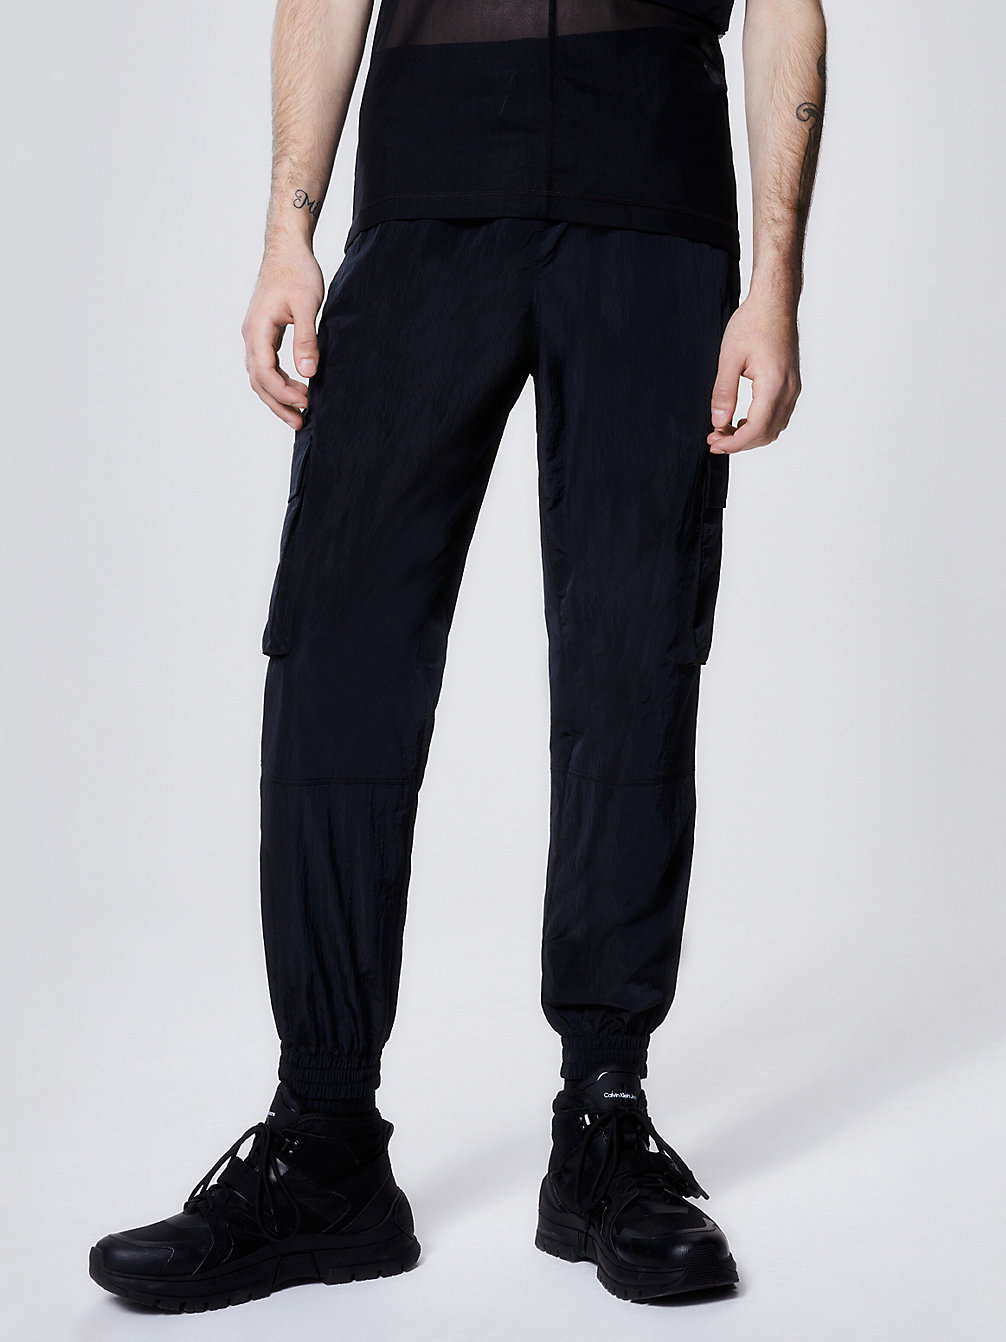 CK BLACK Shiny Nylon Cargo Pants undefined men Calvin Klein